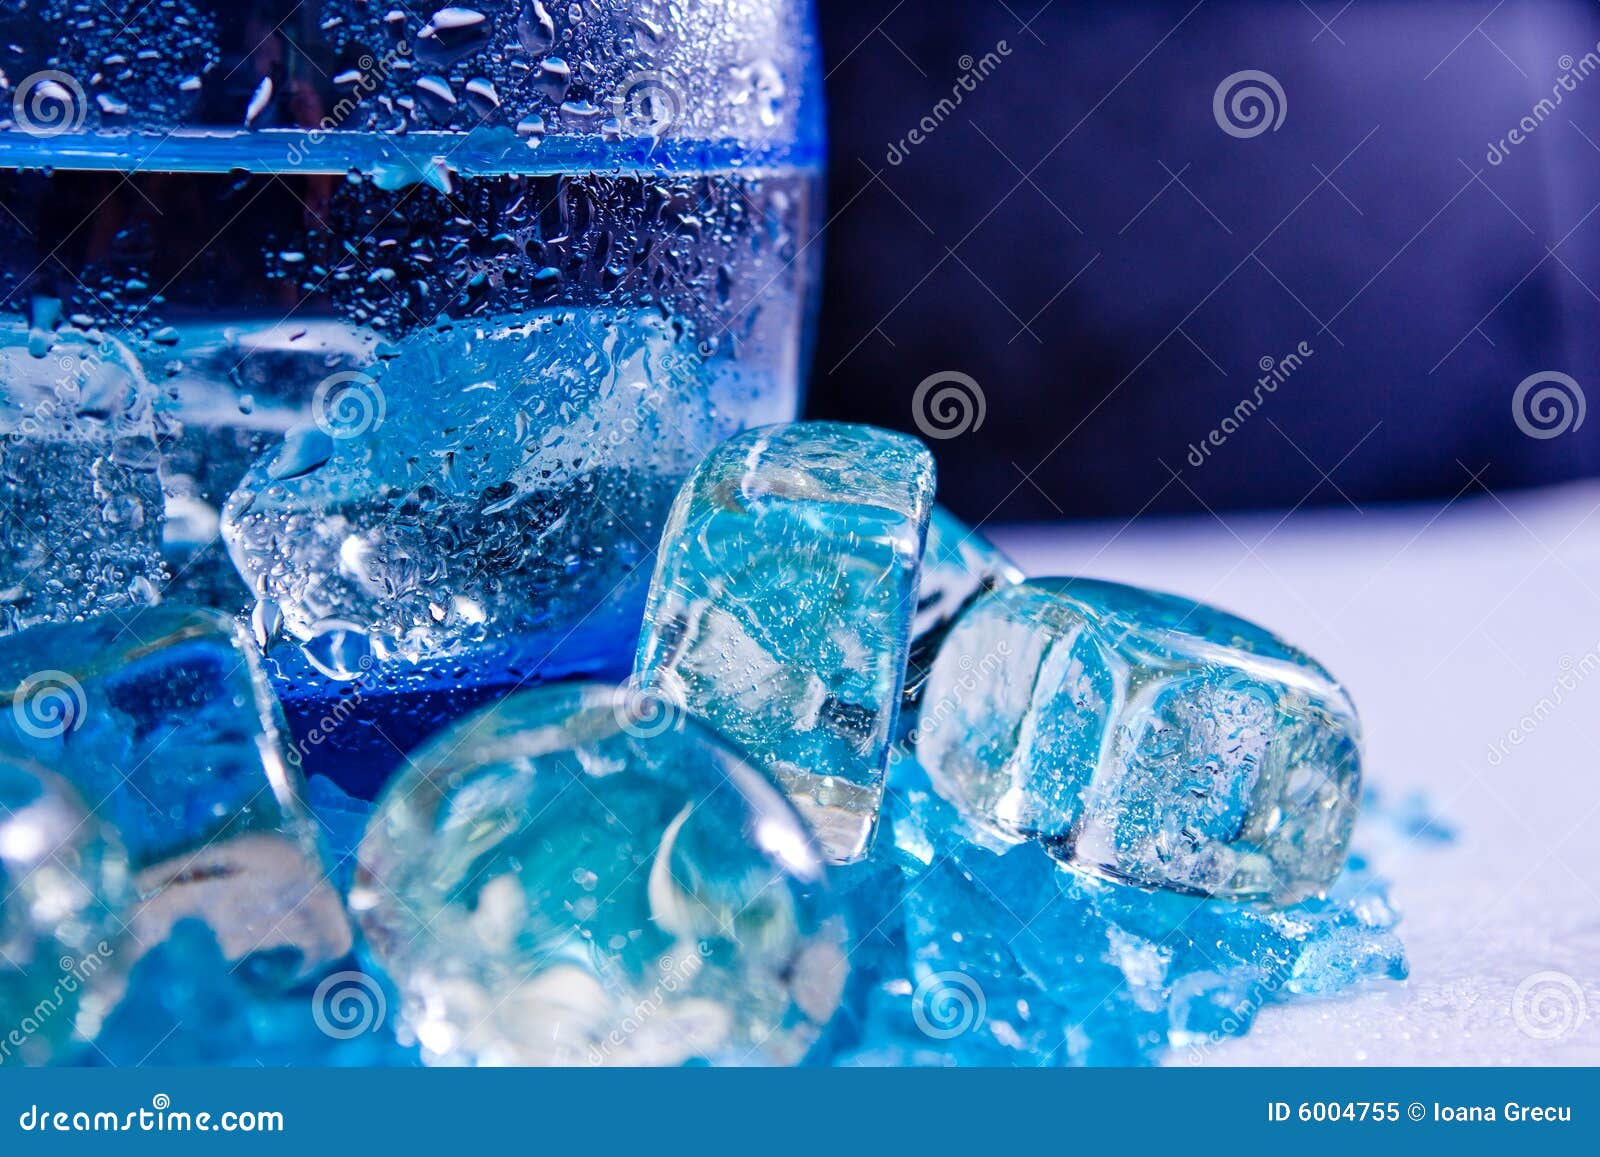 Лед в воде задача. Холодное стекло. Вода со льдом фон. Вода и лед картинки. Красивое Холодное стекло.